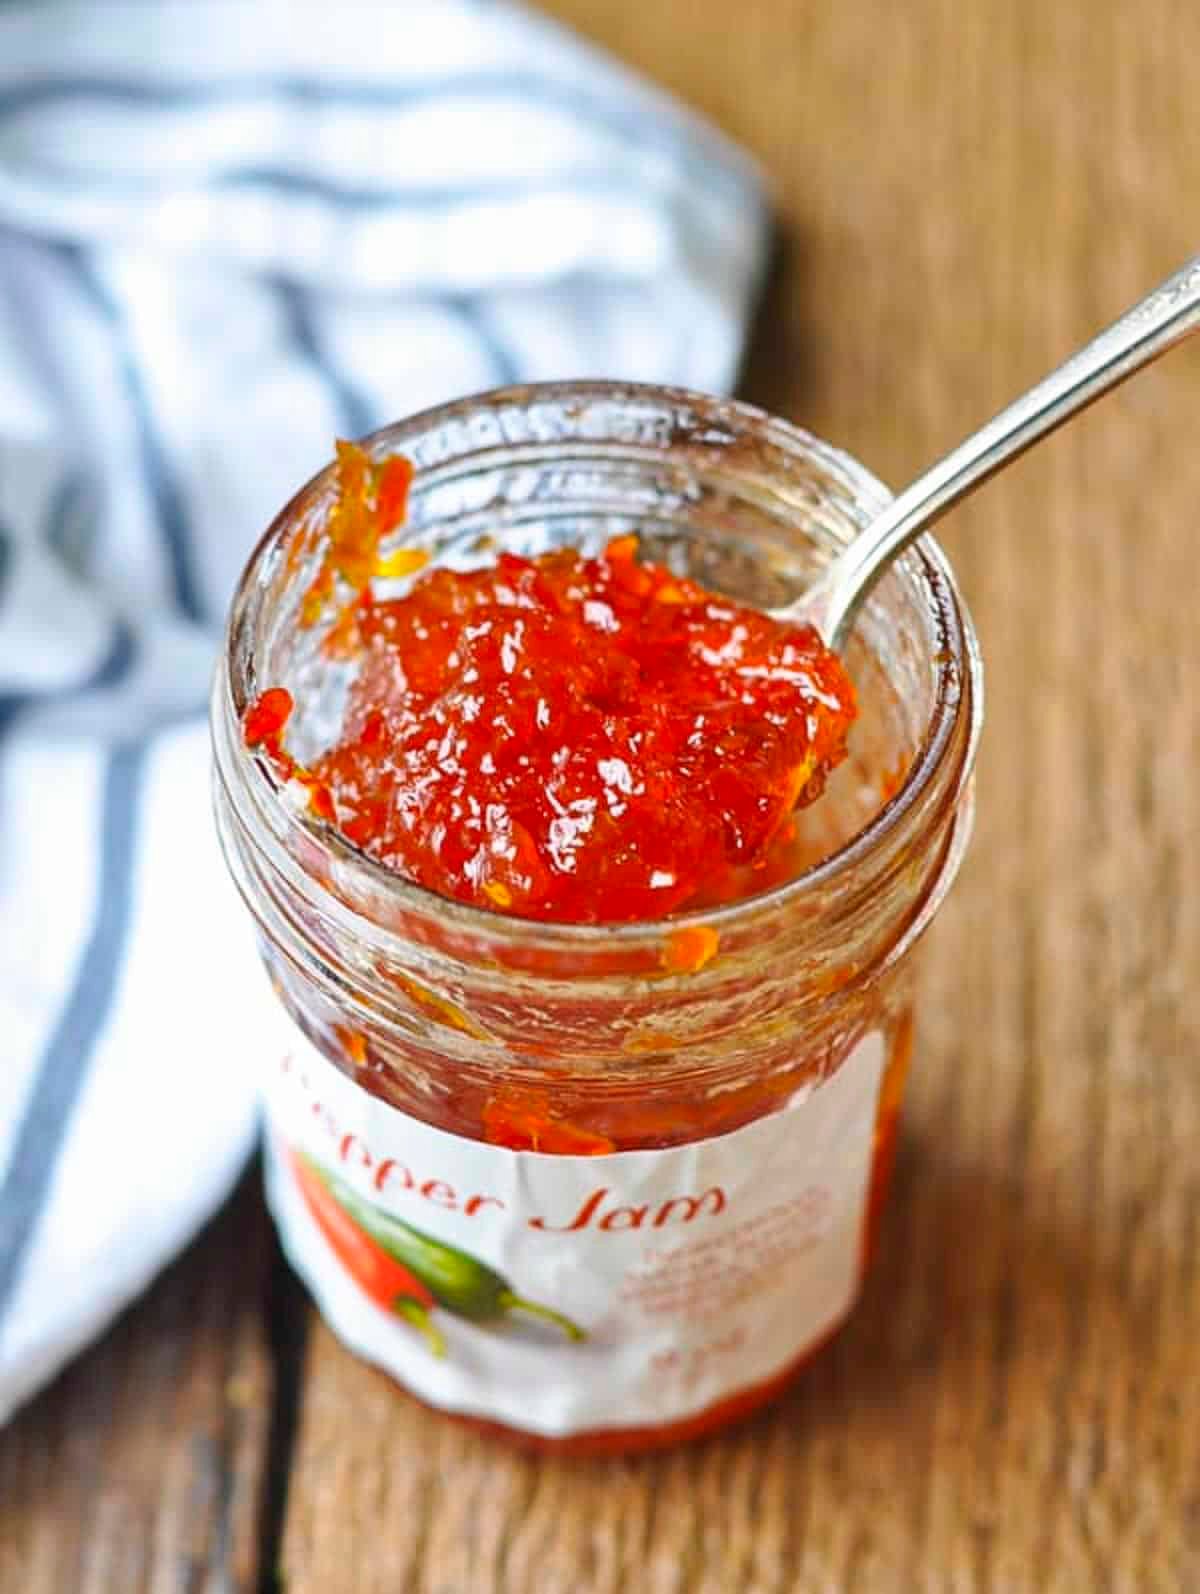 Spoon in a jar of hot pepper jam.